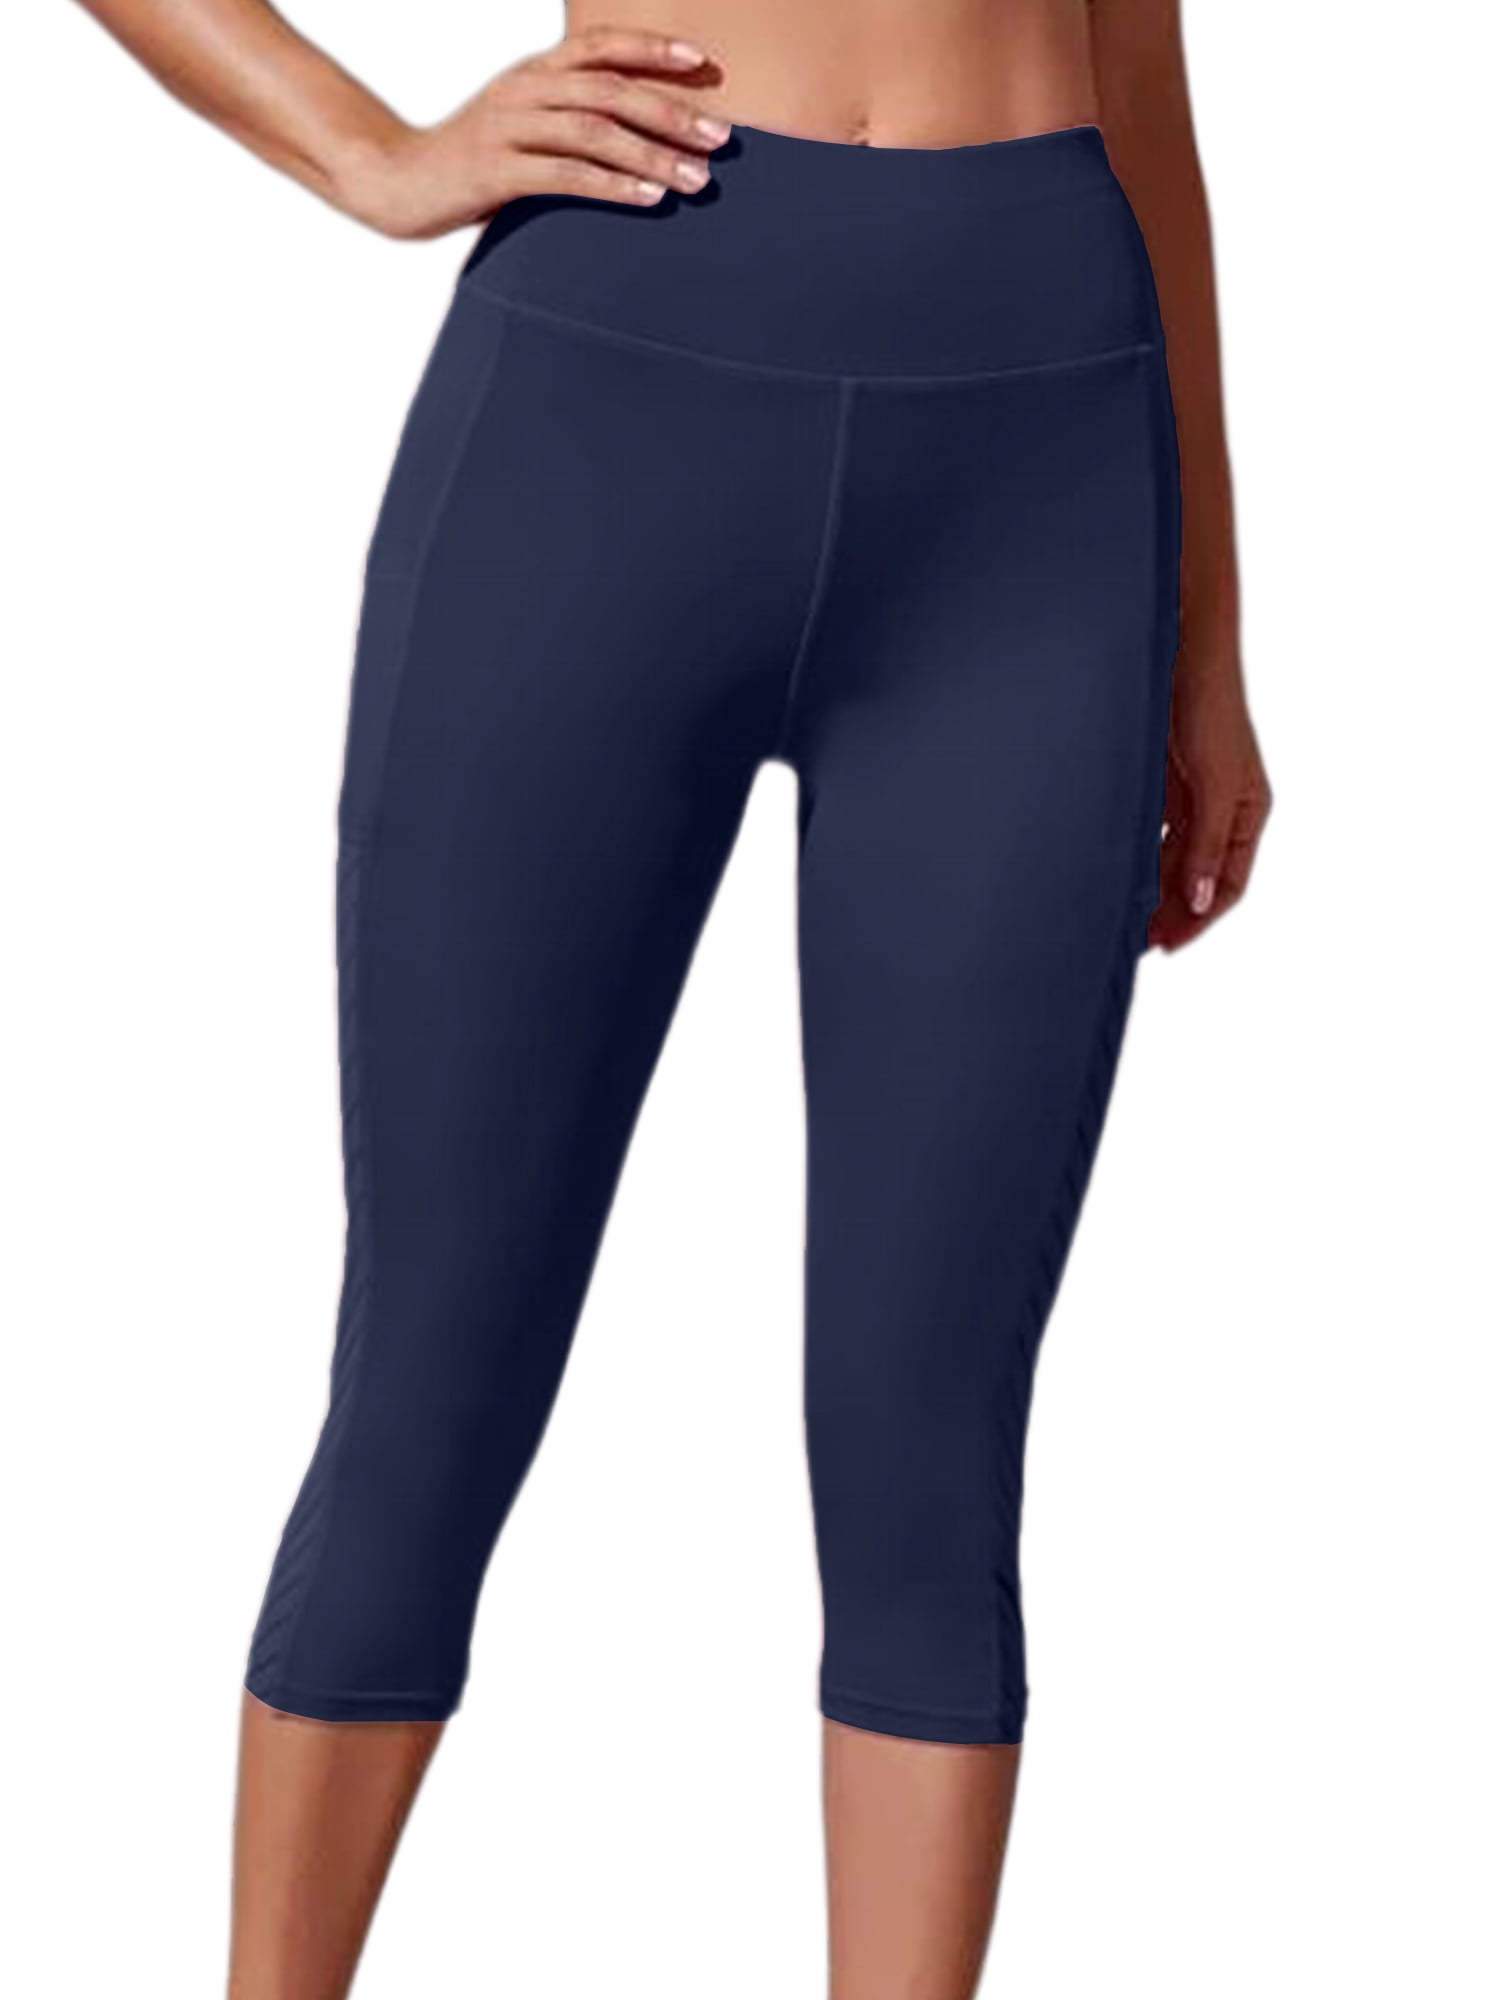 Avamo Ladies Yoga Pants Solid Color Sport Trousers Tummy Control